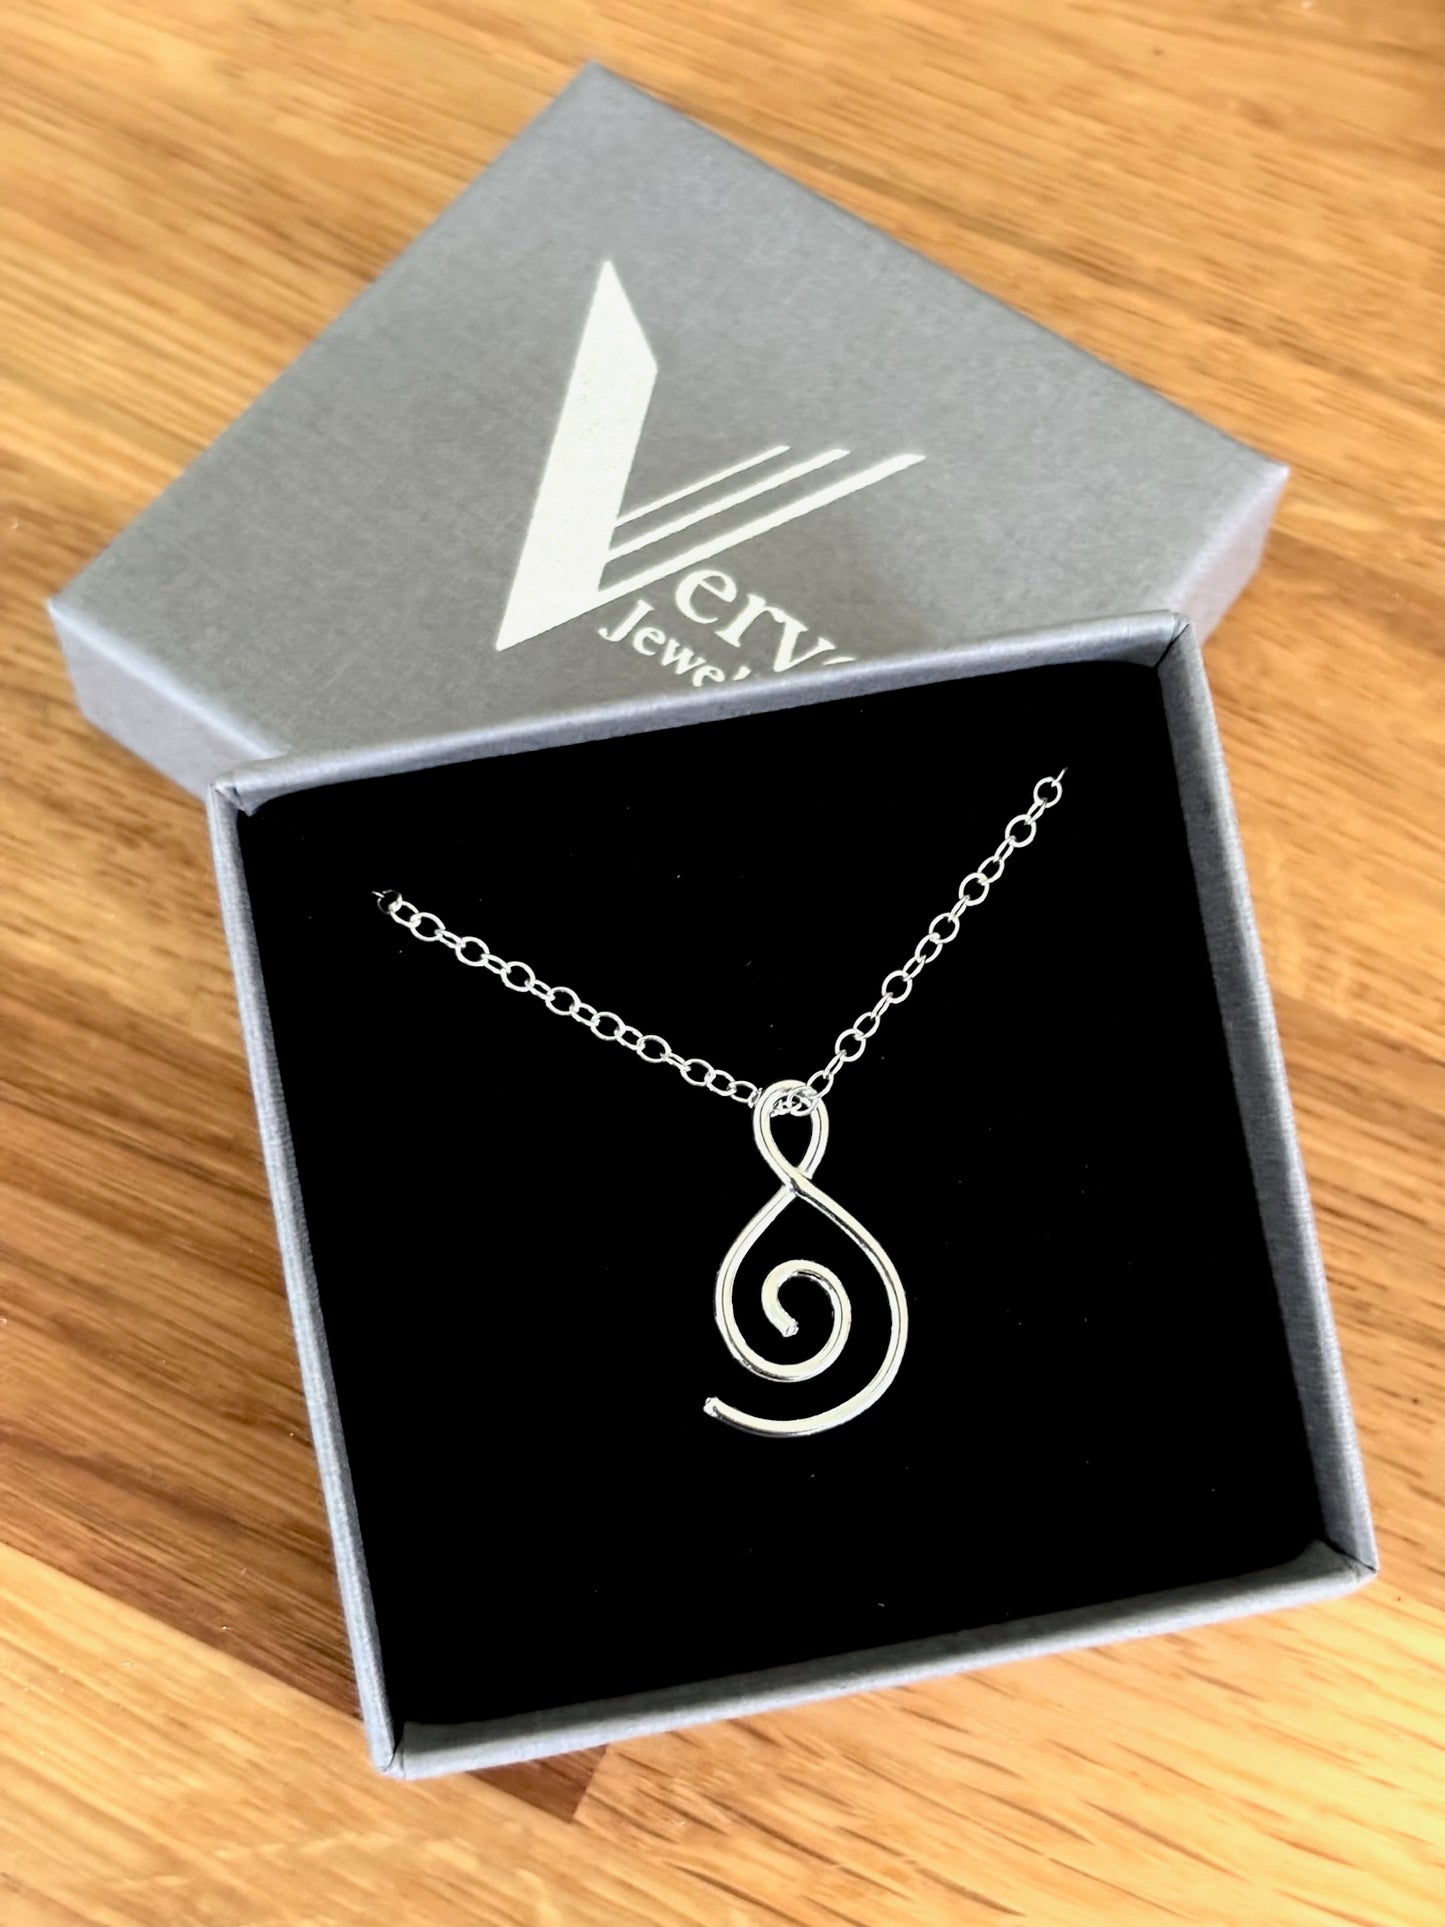 Spirit necklace, sterling silver spiral necklace